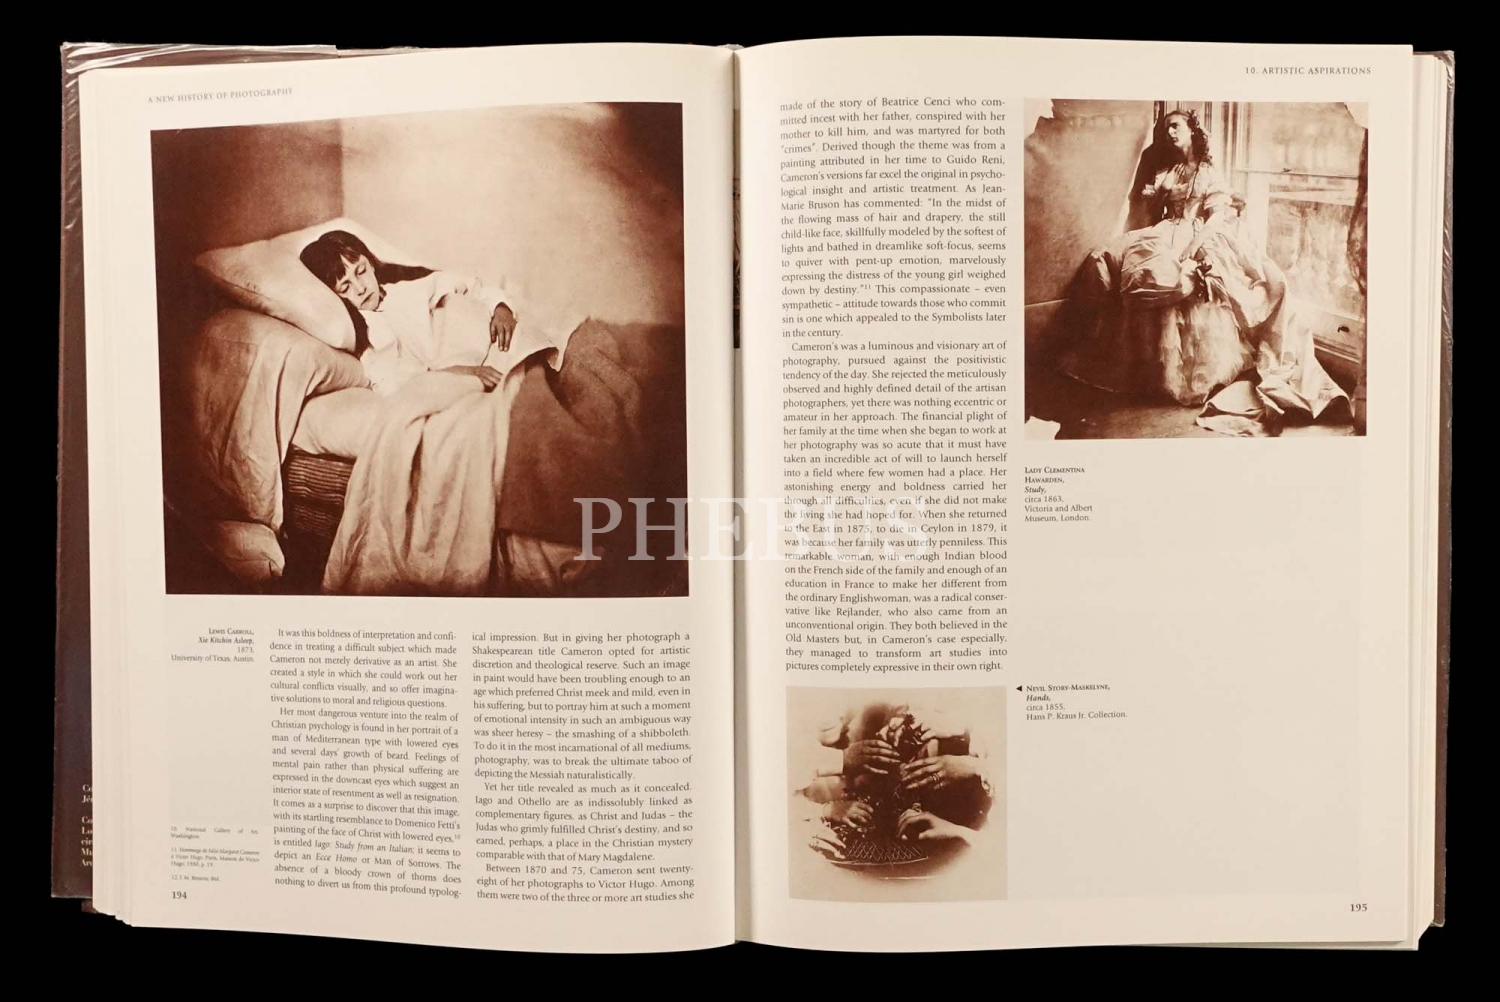 A NEW HISTORY OF PHOTOGRAPHY, (editör: Michel Frizot), 1998, Könemann, 775 sayfa, 25x31 cm...